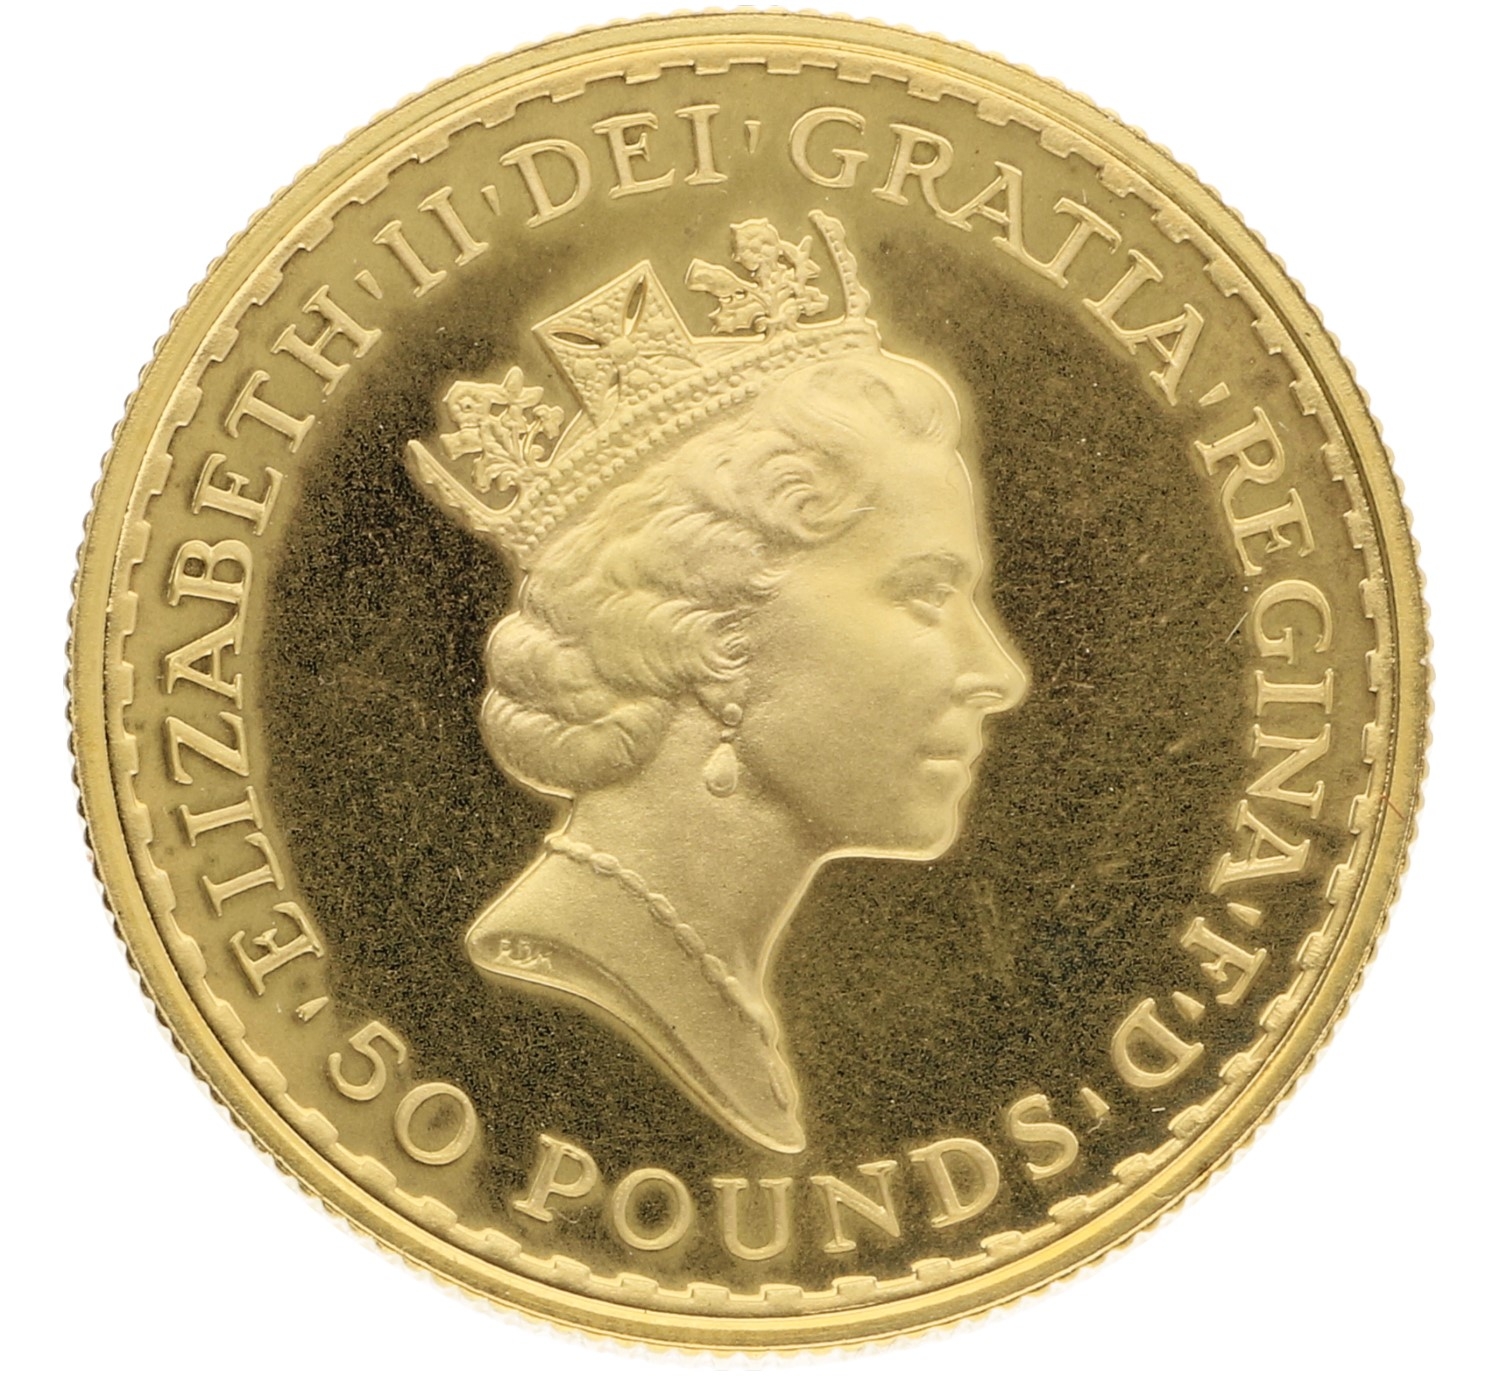 50 Pounds - Great Britain - 1988 - 1/2oz